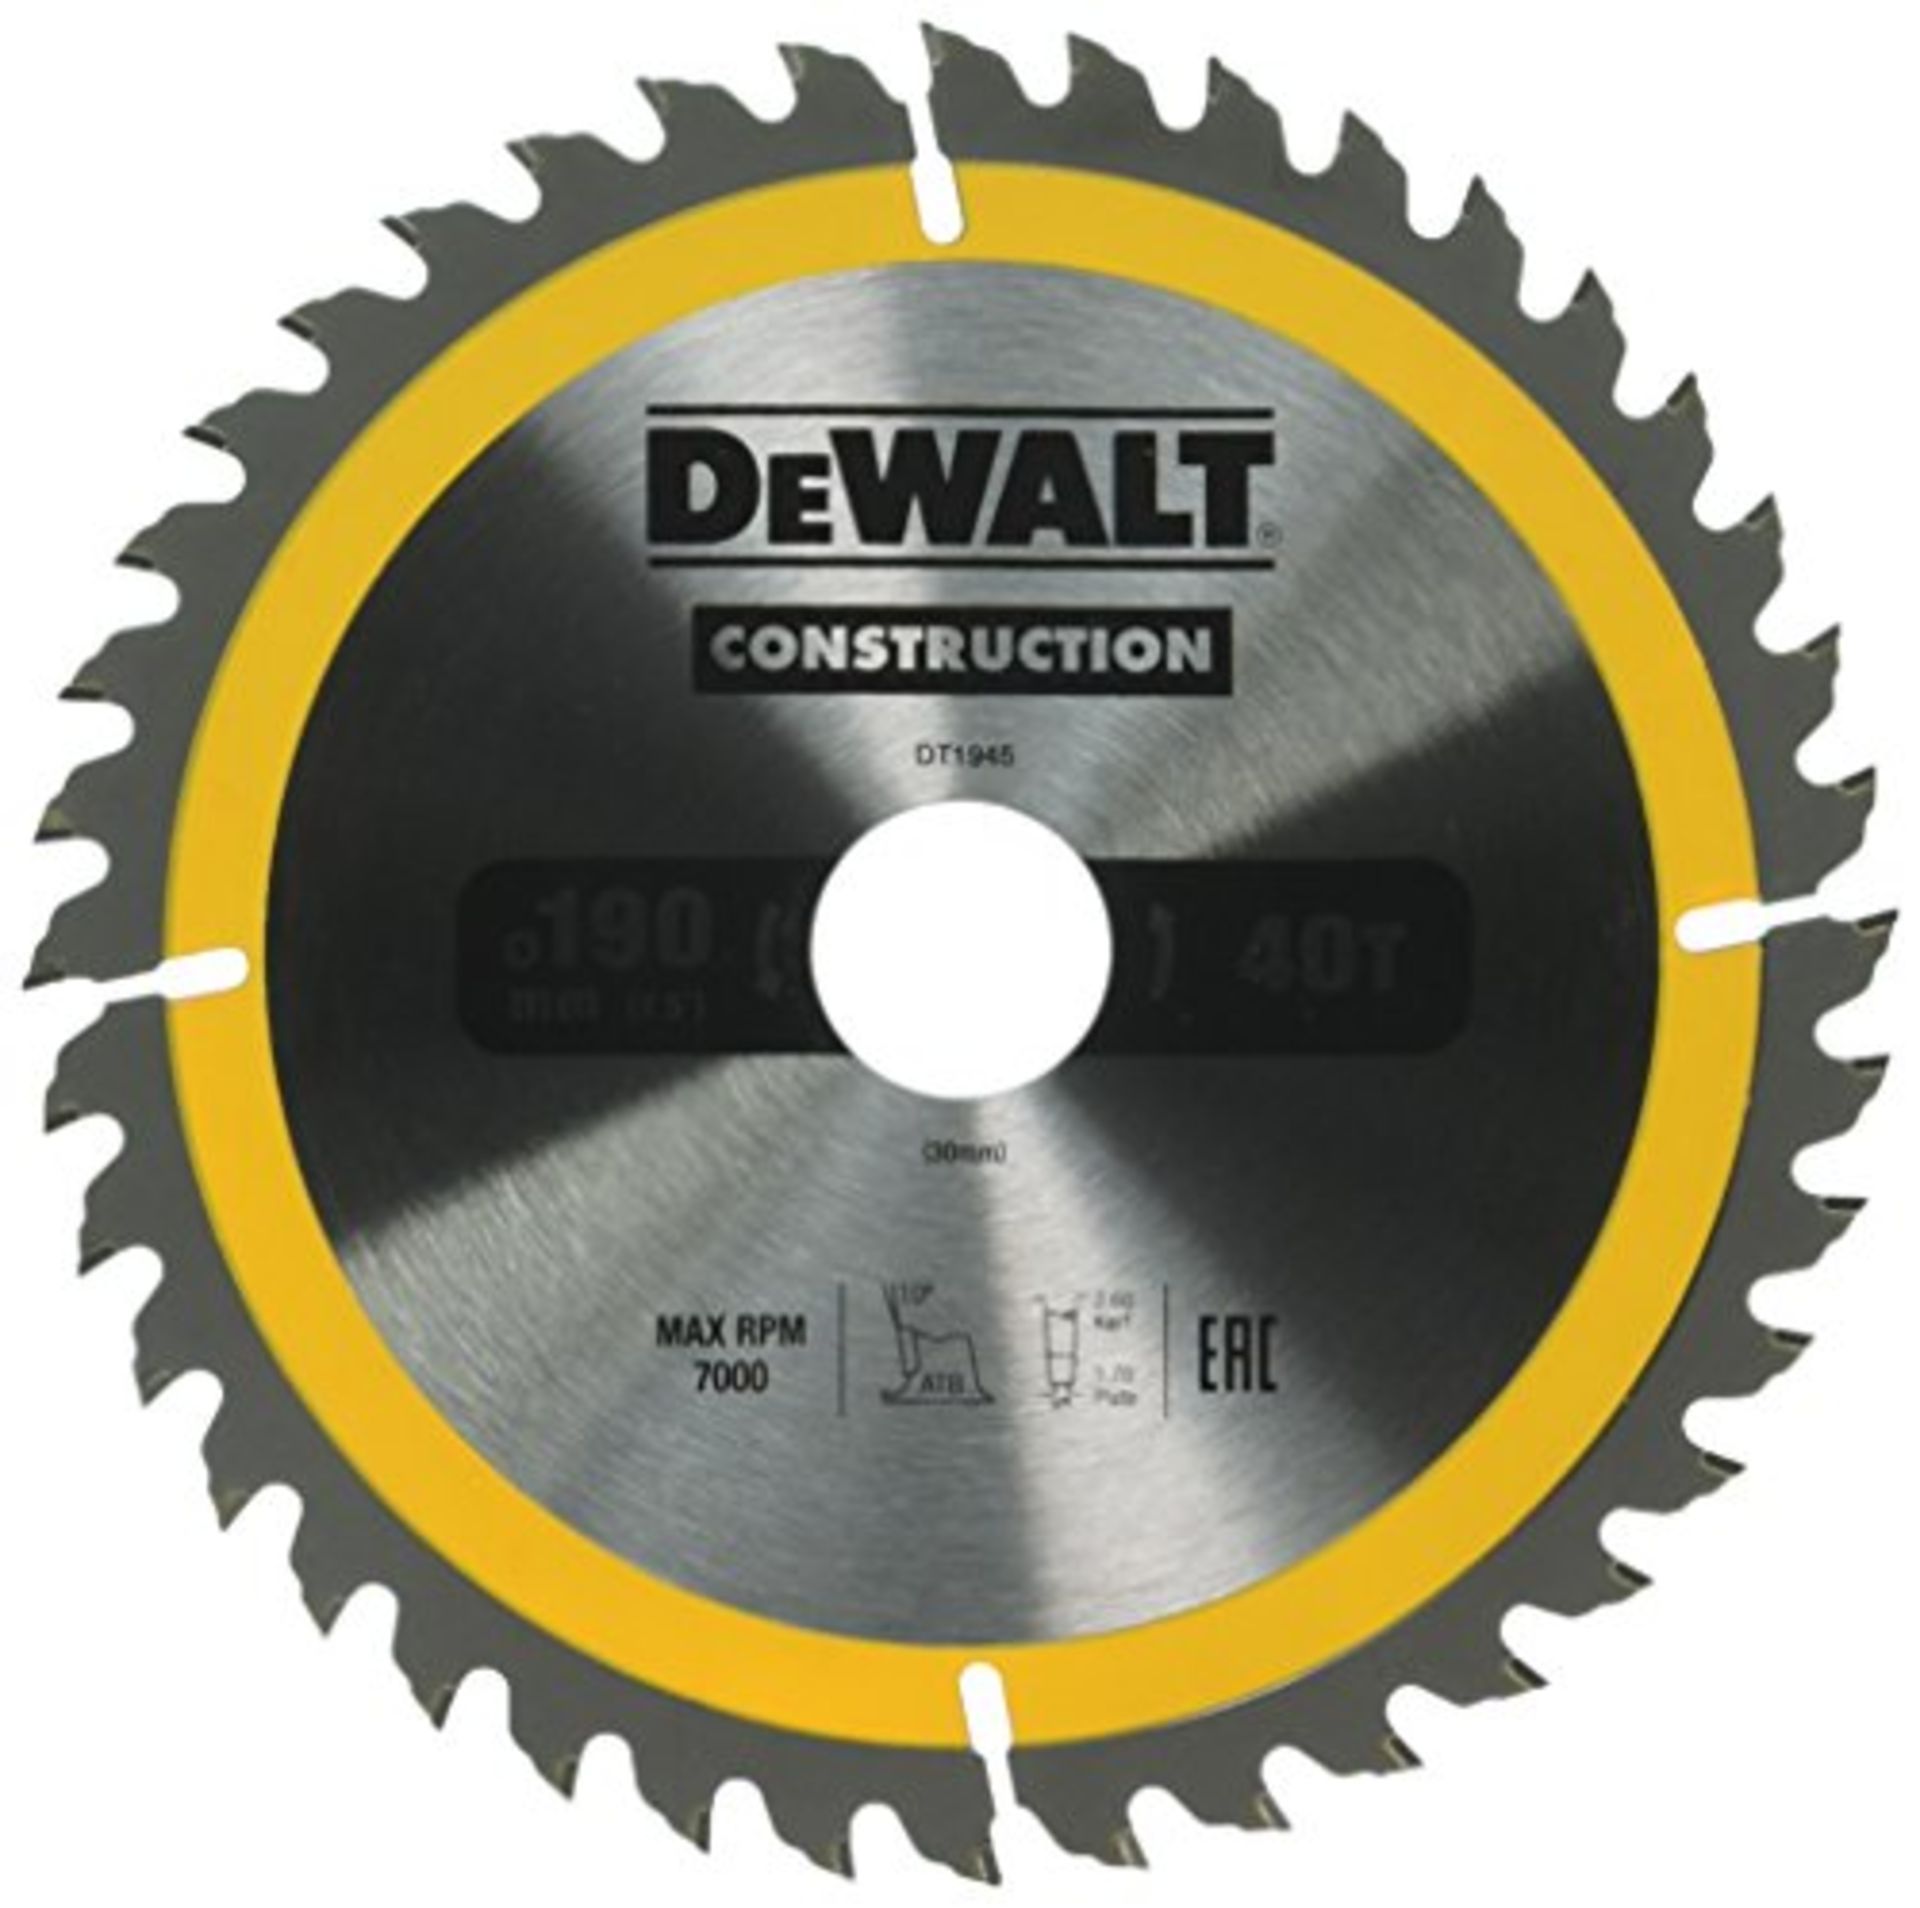 1 x Dewalt DT1945-QZ Construction Circular Saw Blade | EAN: 5035048095621 | RRP £41.7 - Image 3 of 3